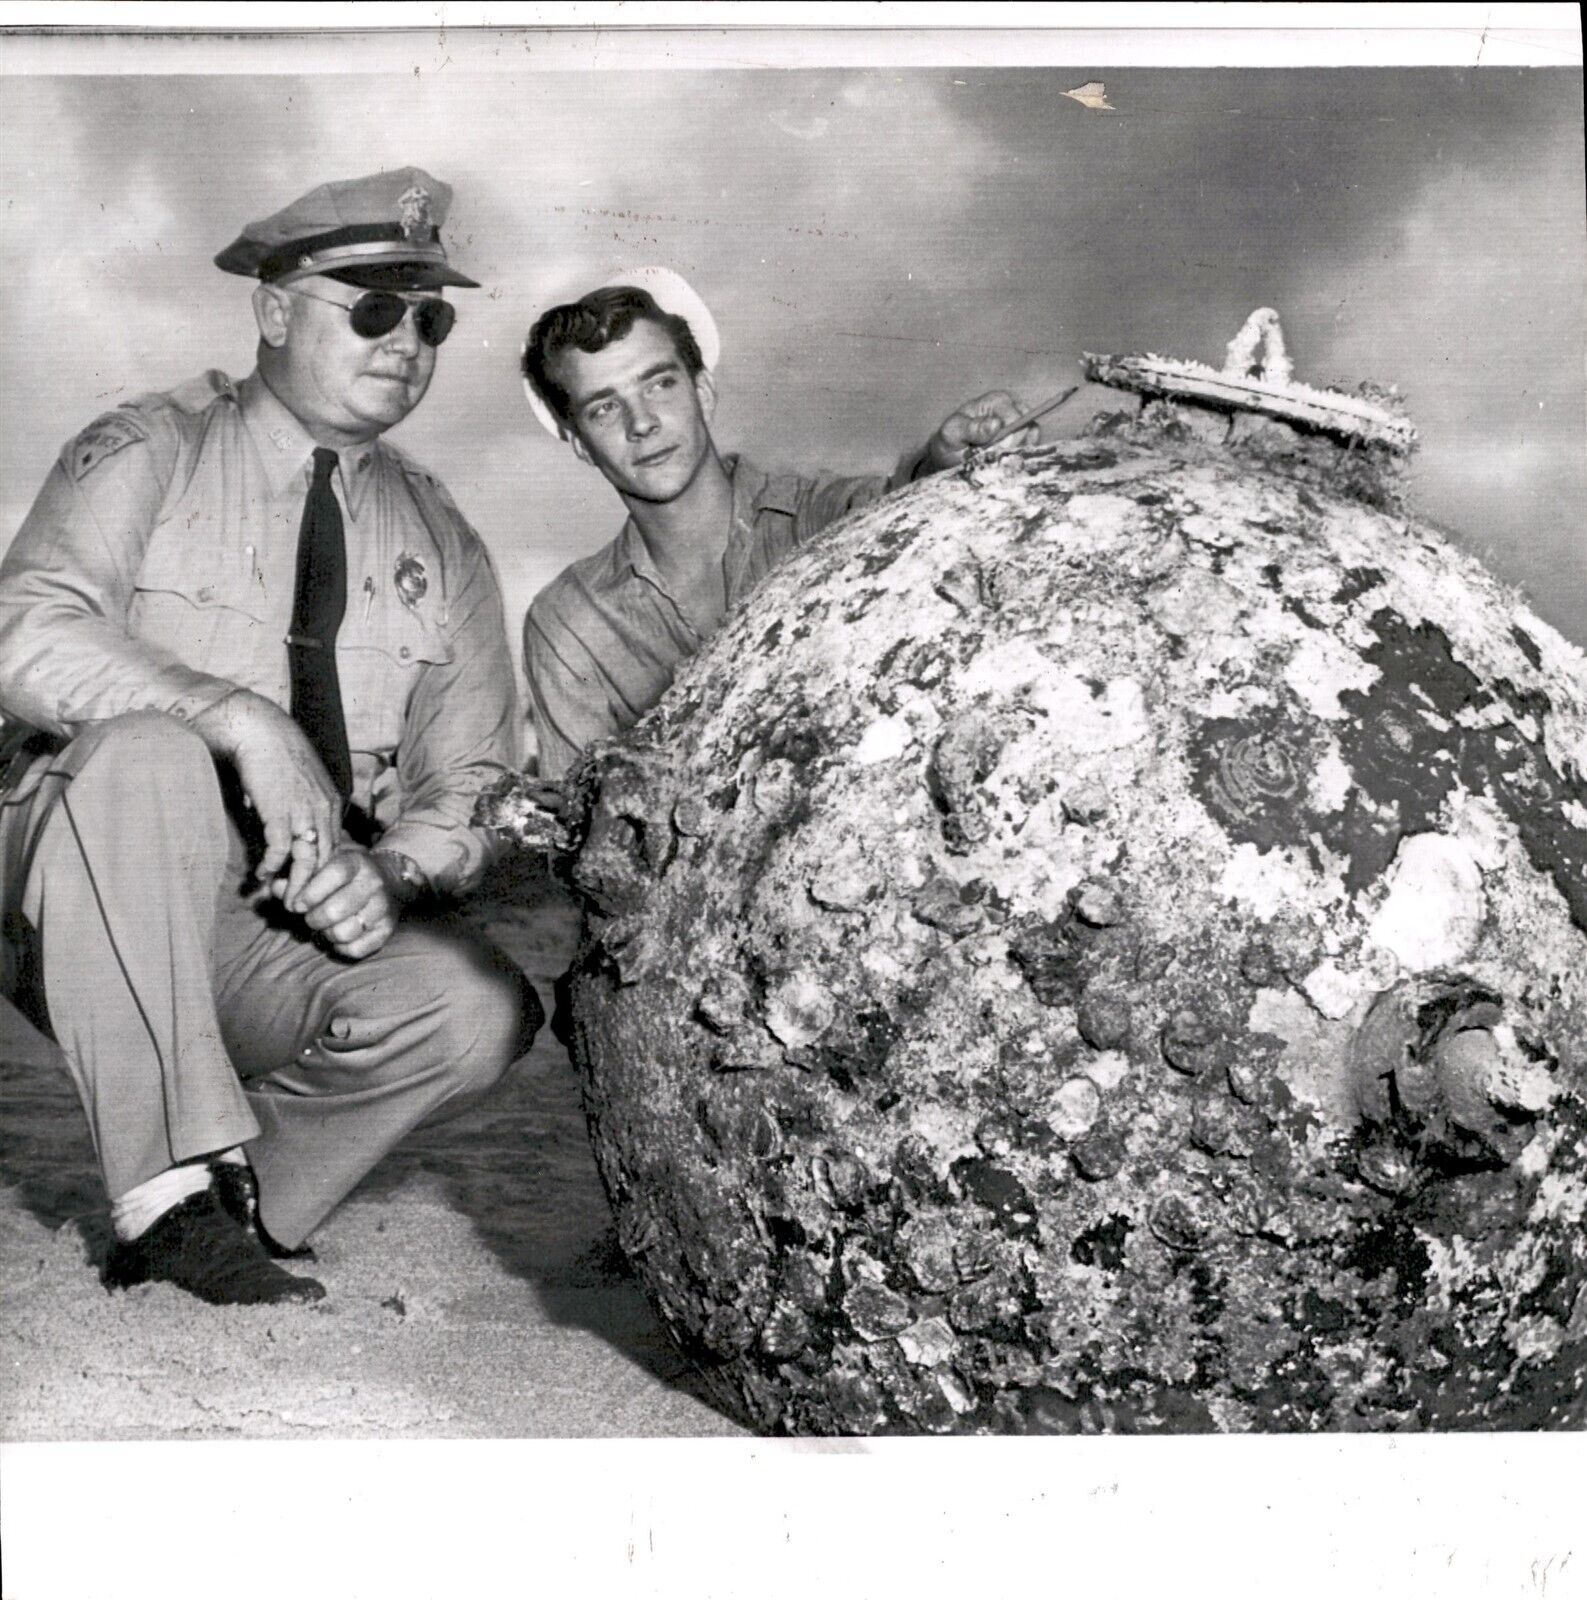 LD351 1957 Wire Photo MARK 6 MINE FOUND ON DELRAY BEACH FLORIDA POLICE EVACUATE